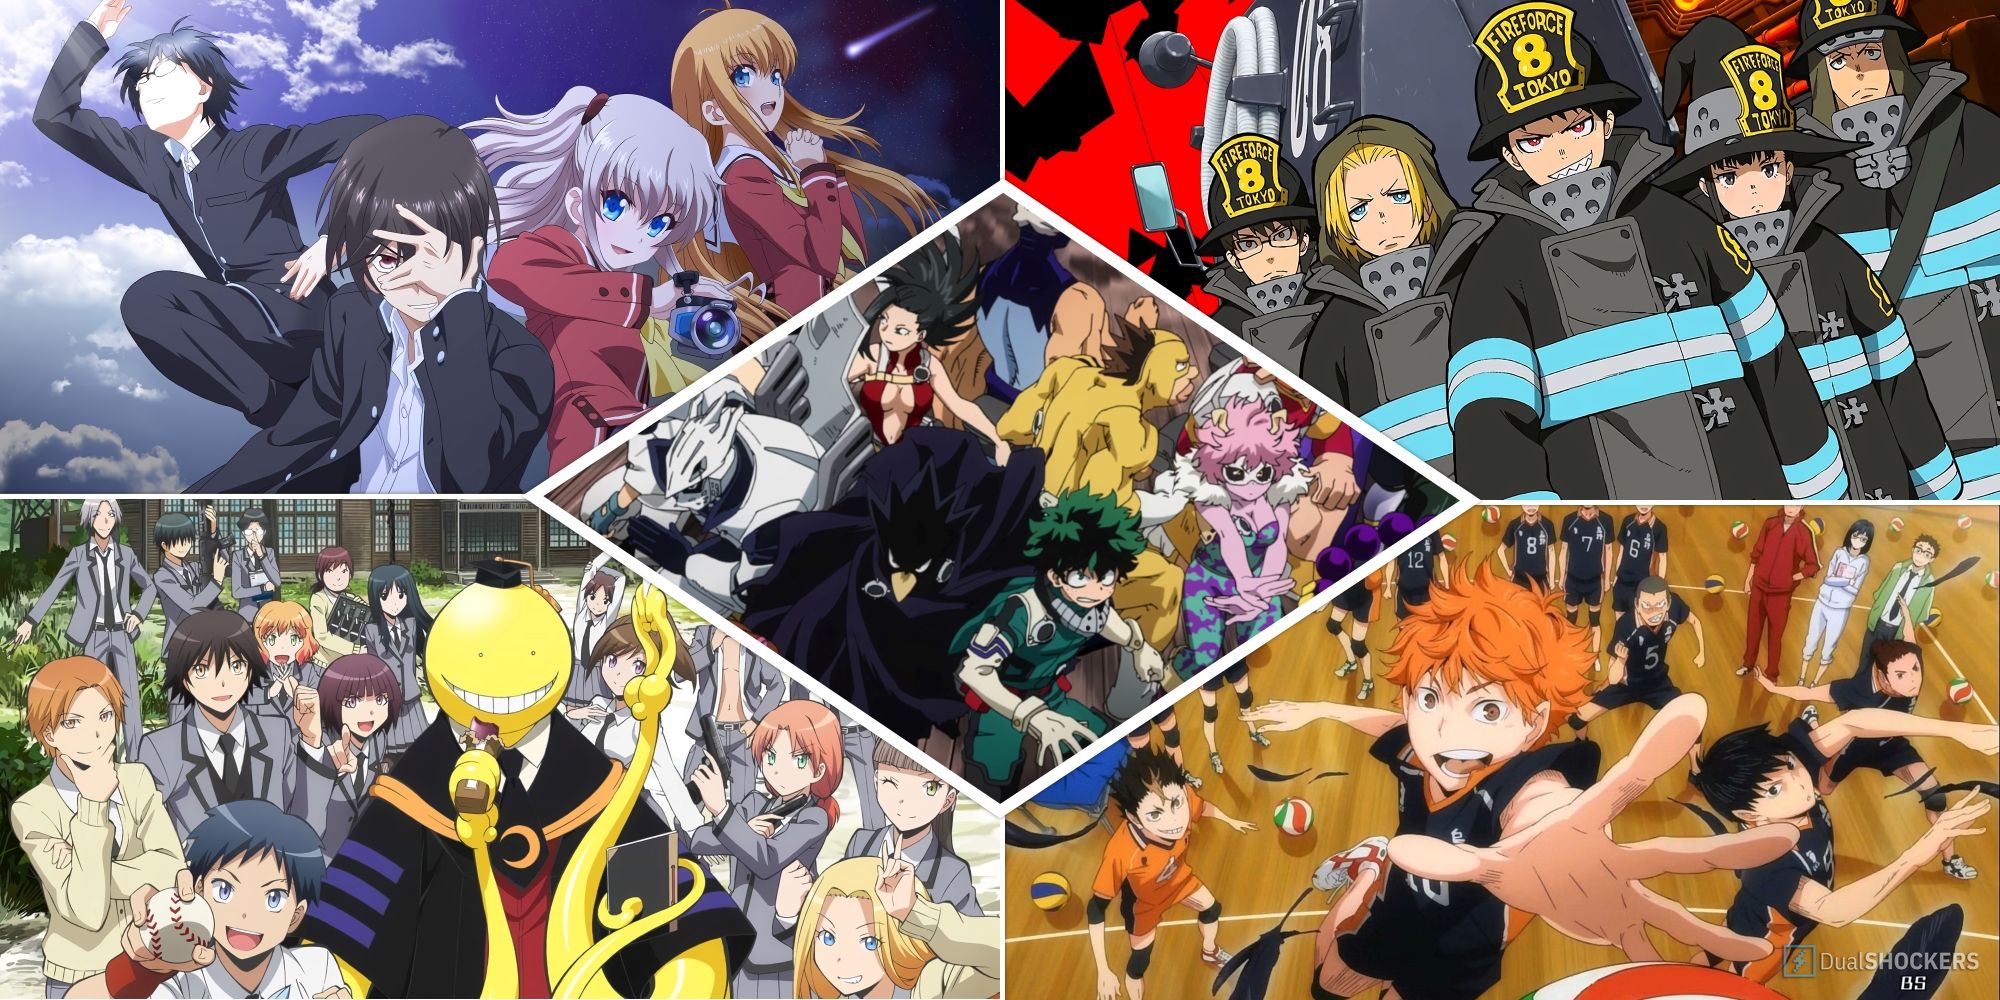 Studio Bones Animates My Hero Academia Show, Posts 1st Visual - News - Anime  News Network